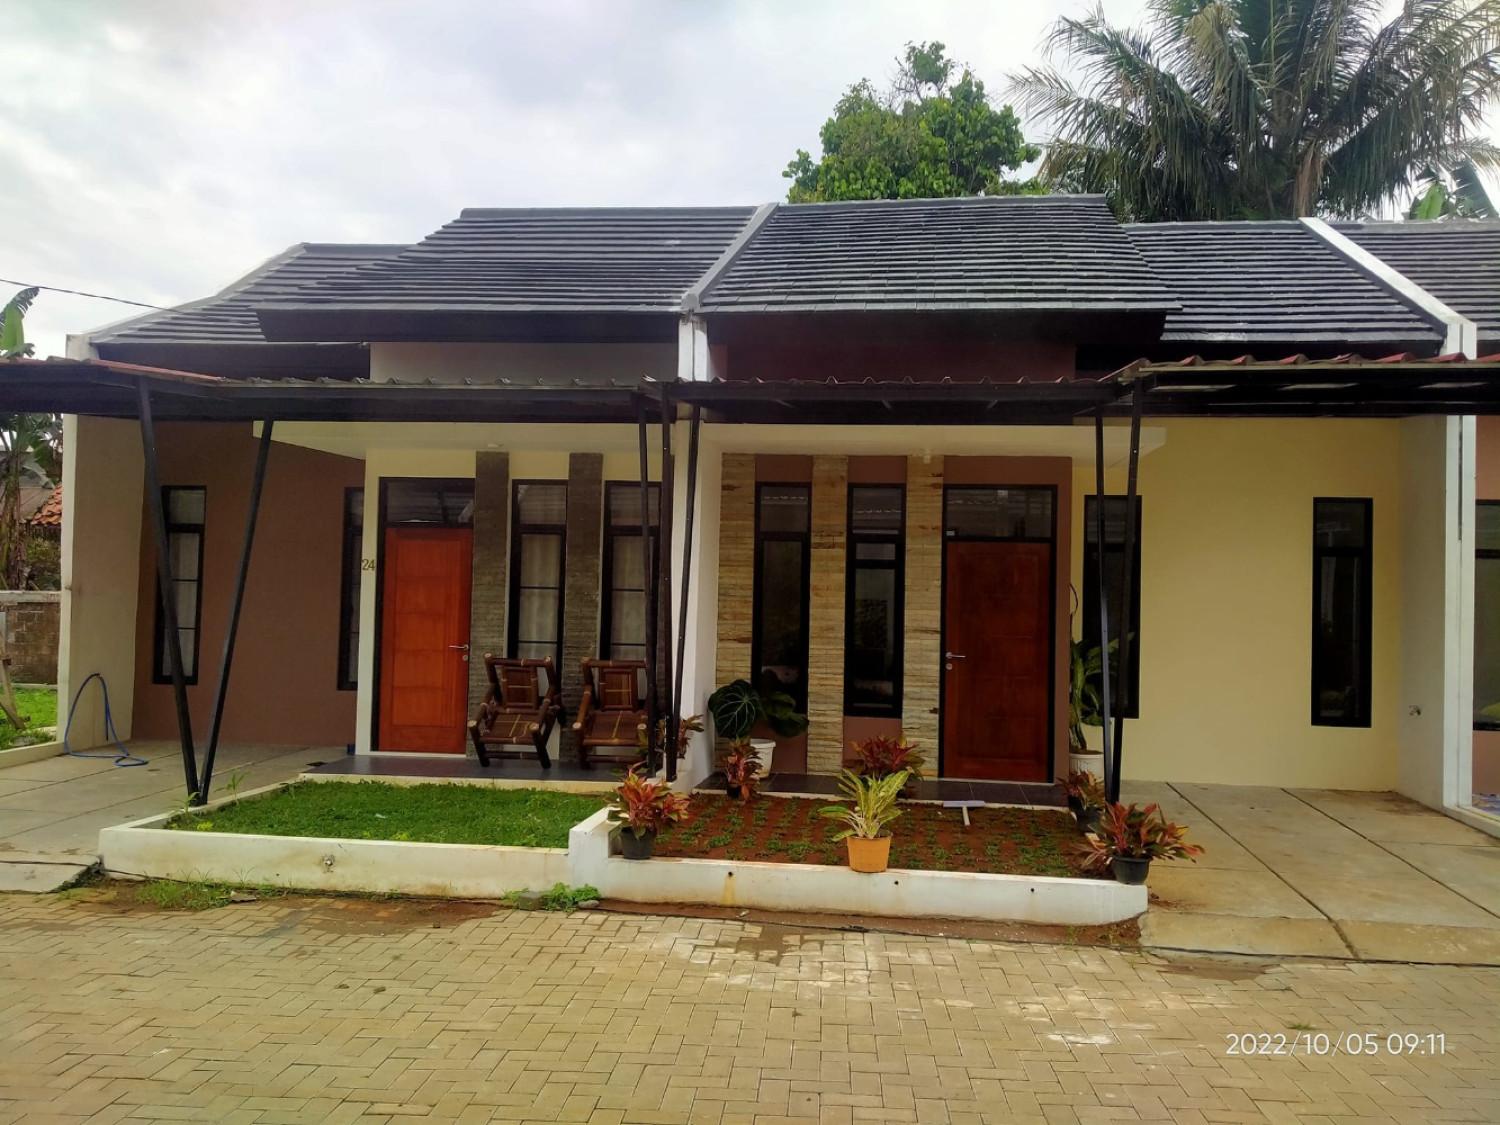 Fasad Padmasari Residence